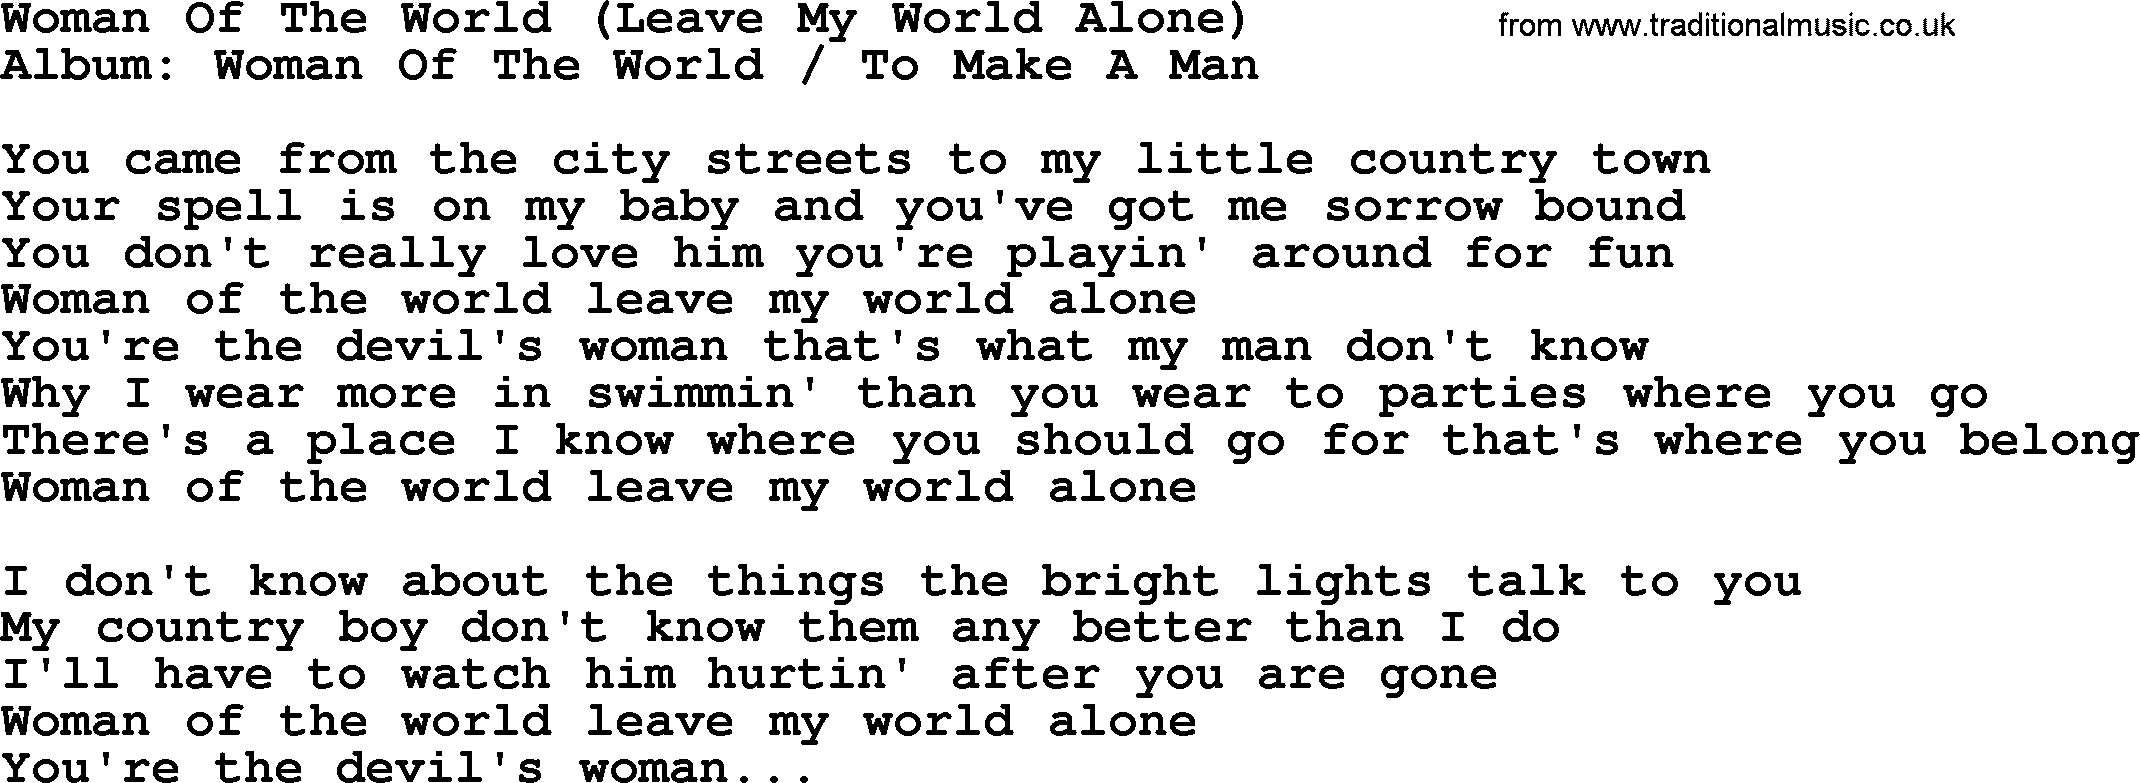 Loretta Lynn song: Woman Of The World (Leave My World Alone) lyrics